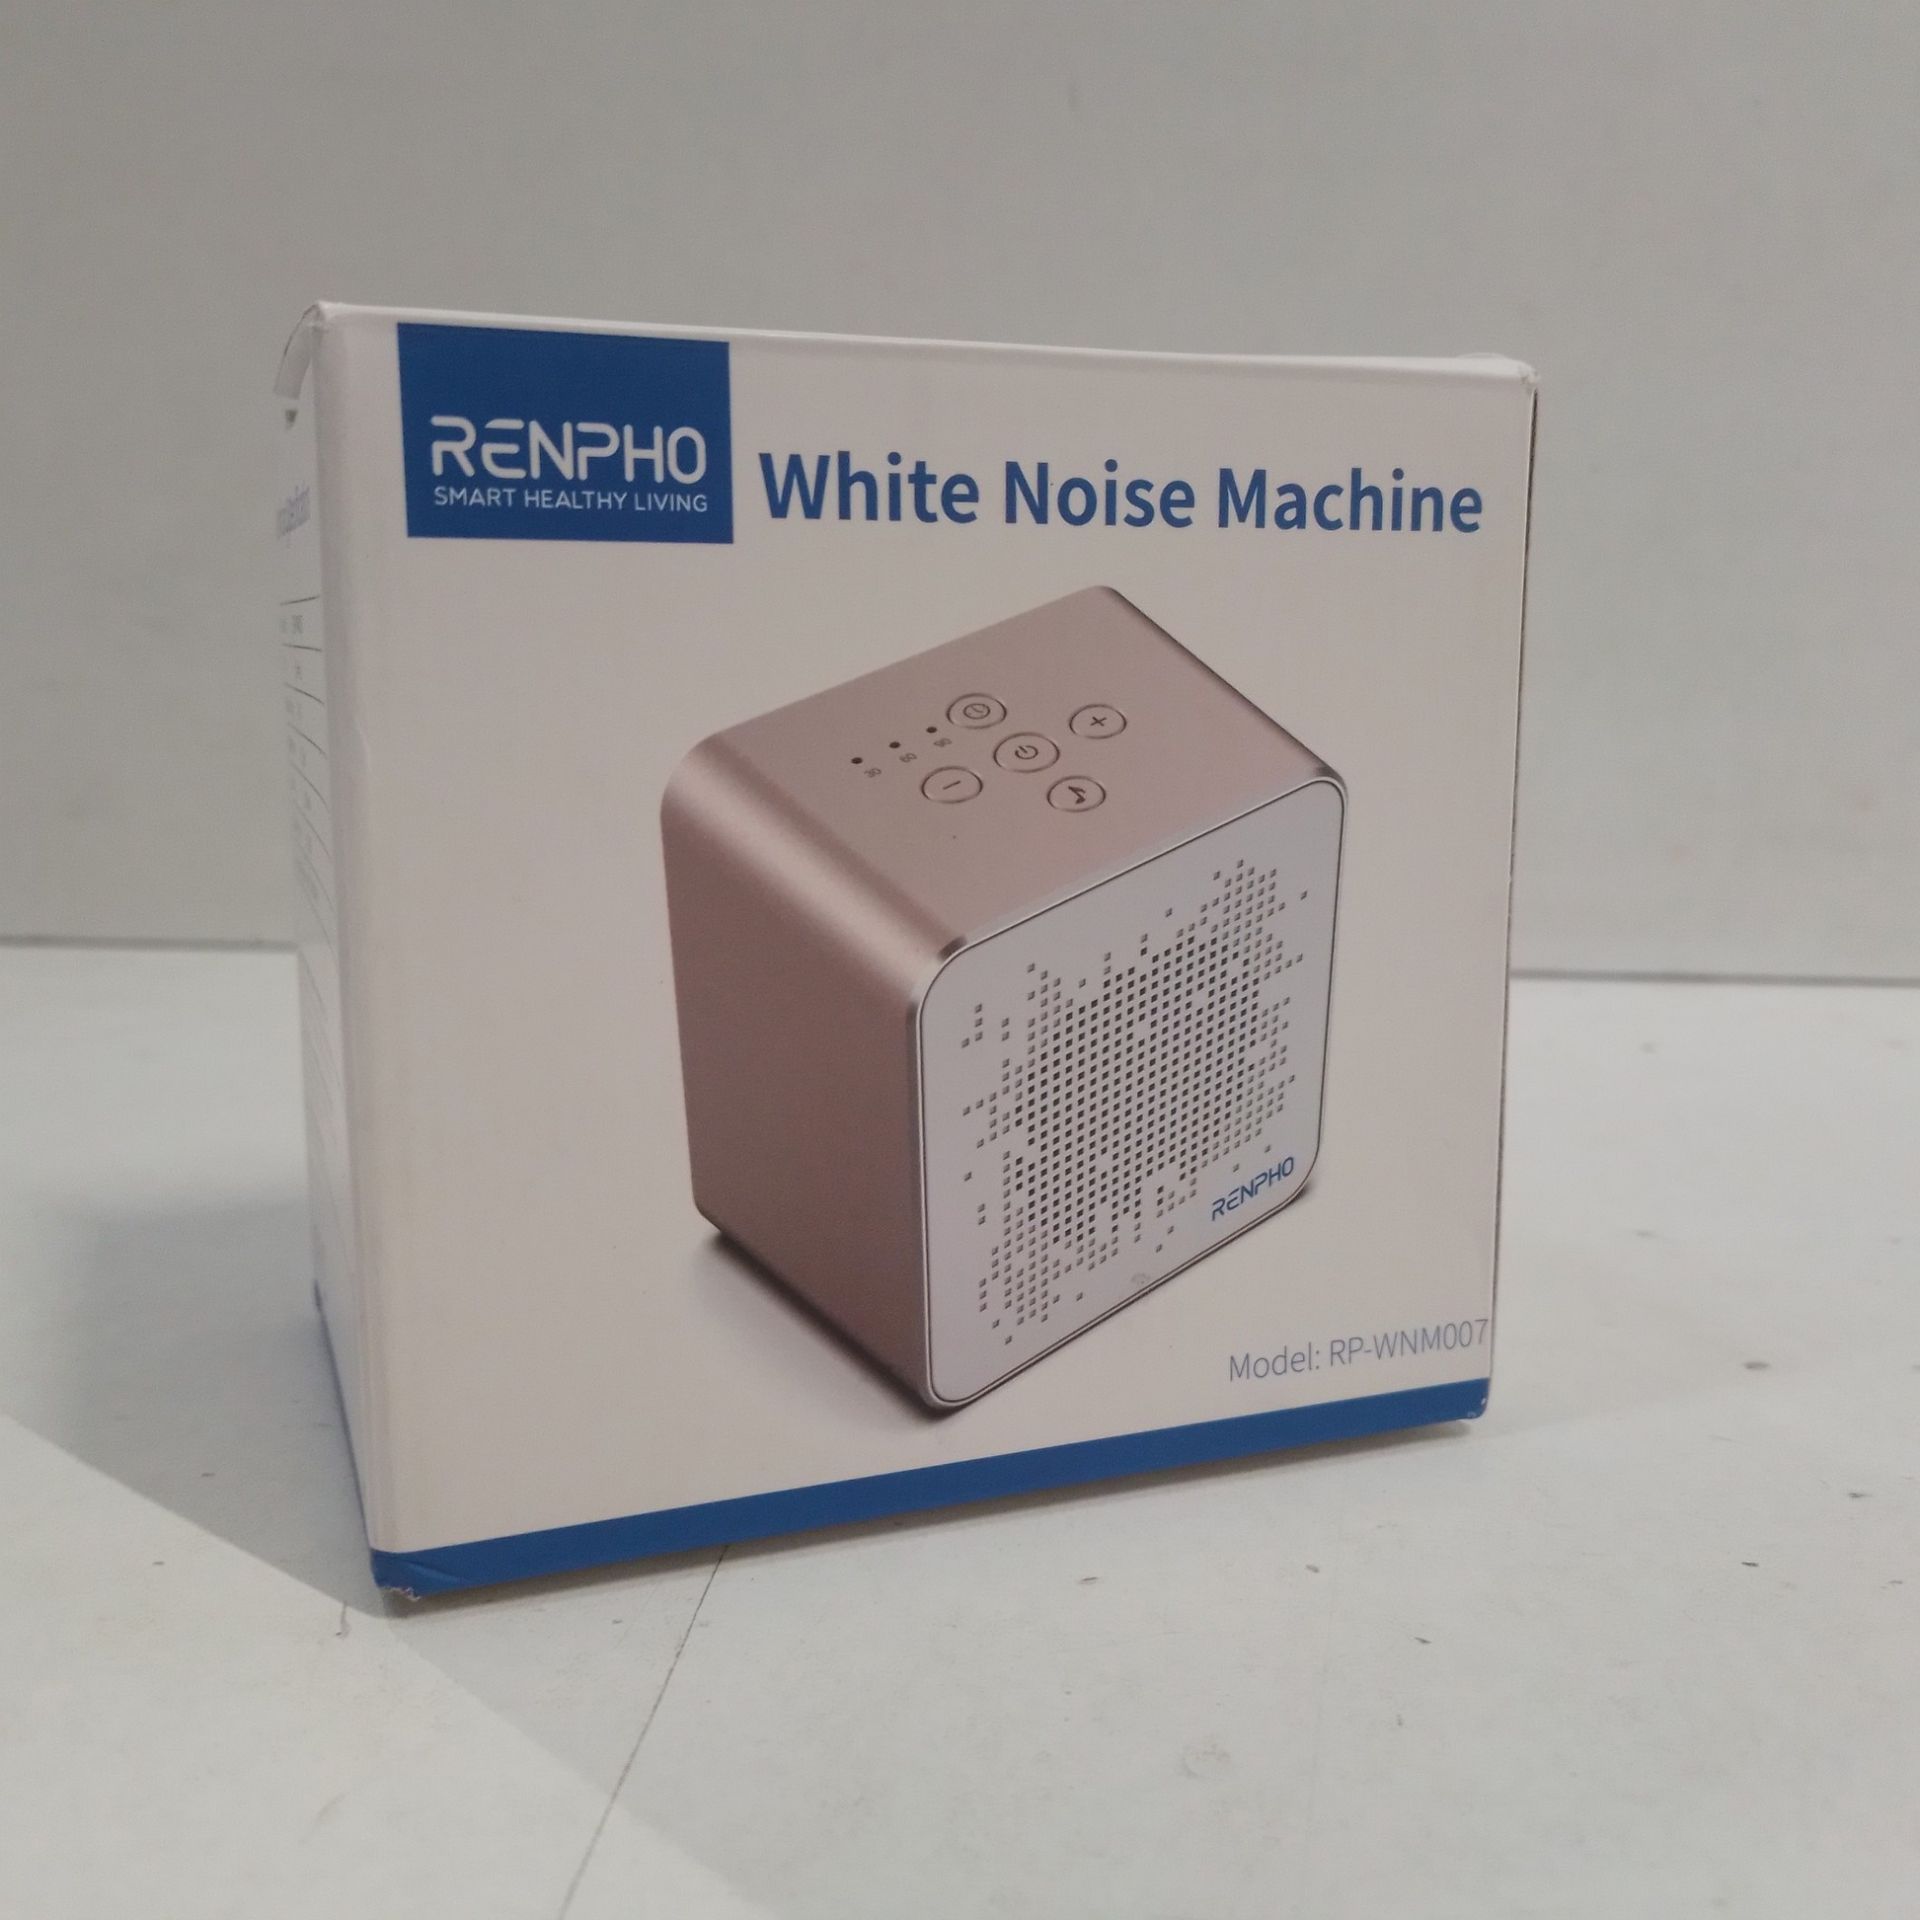 RRP £36.49 White Noise Machine - Image 2 of 2